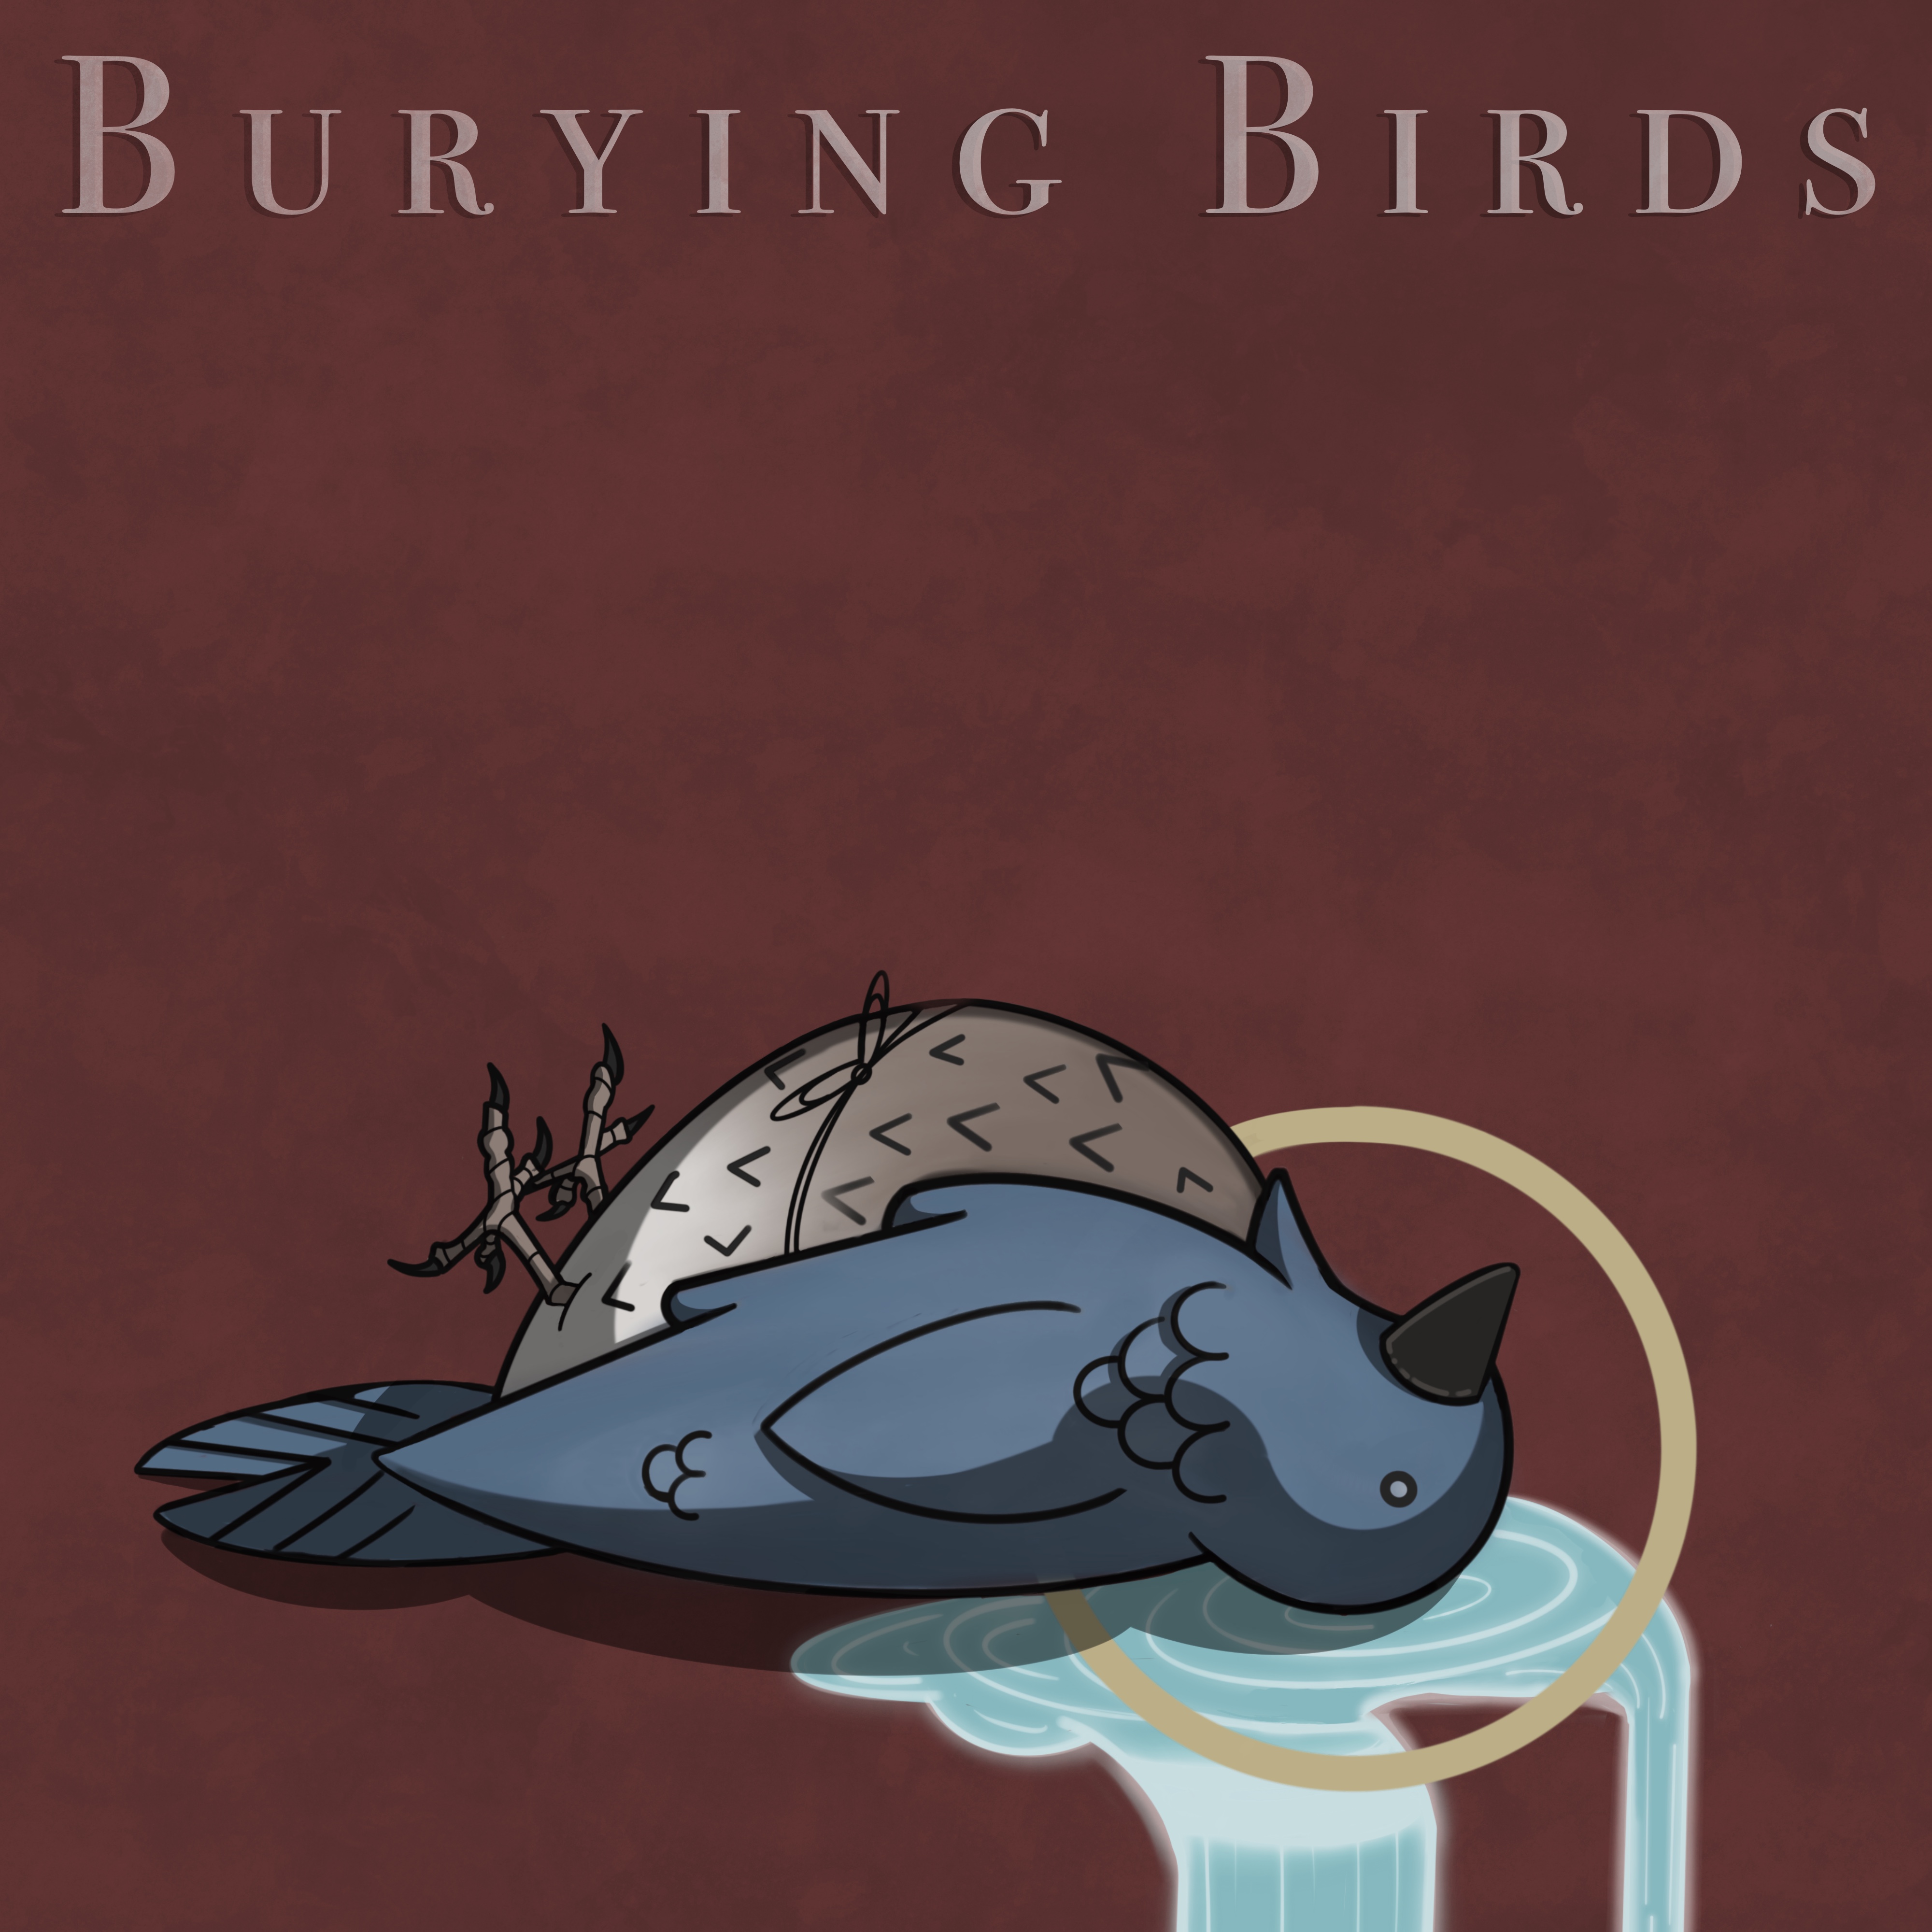 Burying Birds, single release - "Gardens"